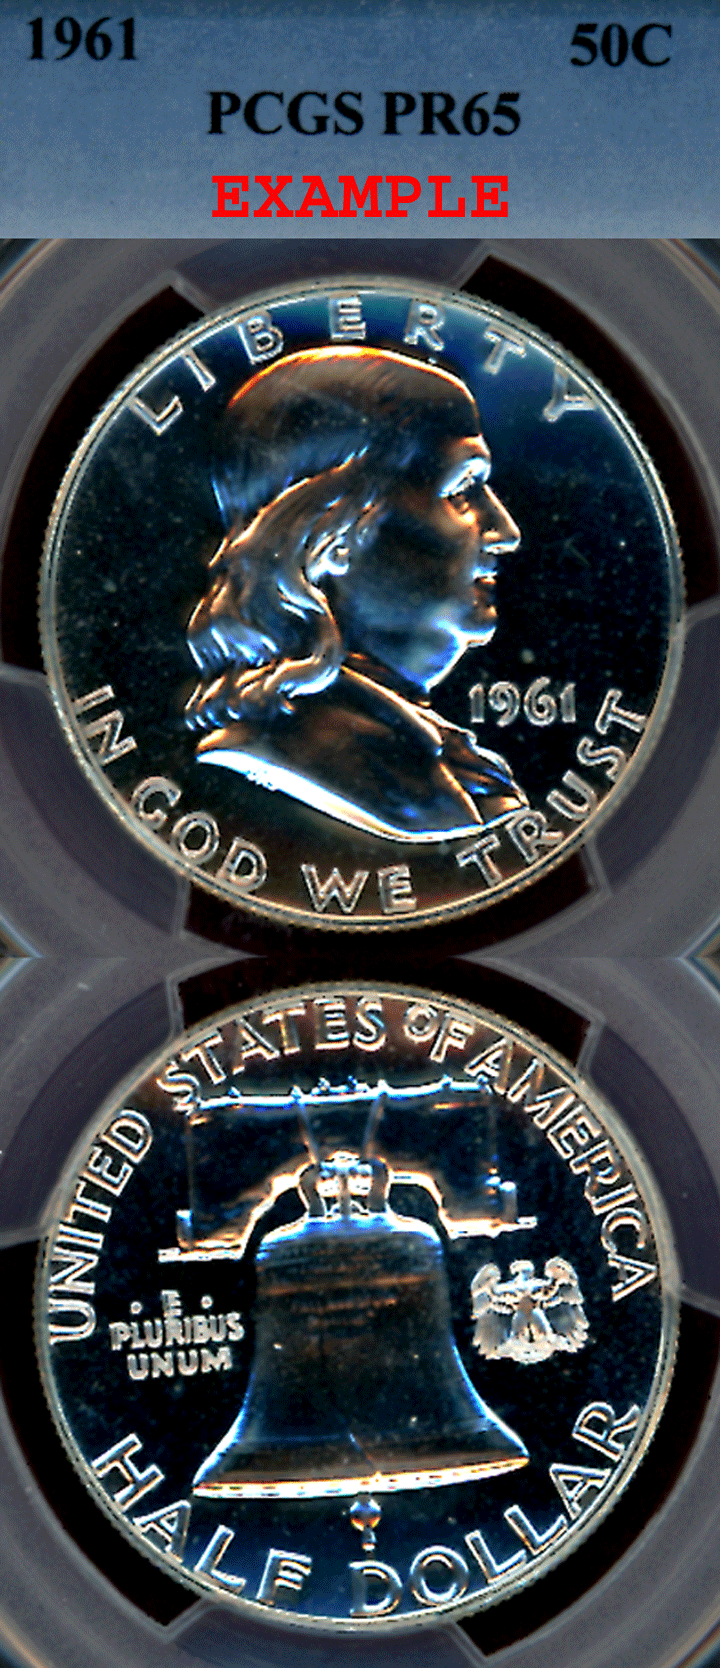 1961 50c NGC Proof 65 Franklin silver half dollar